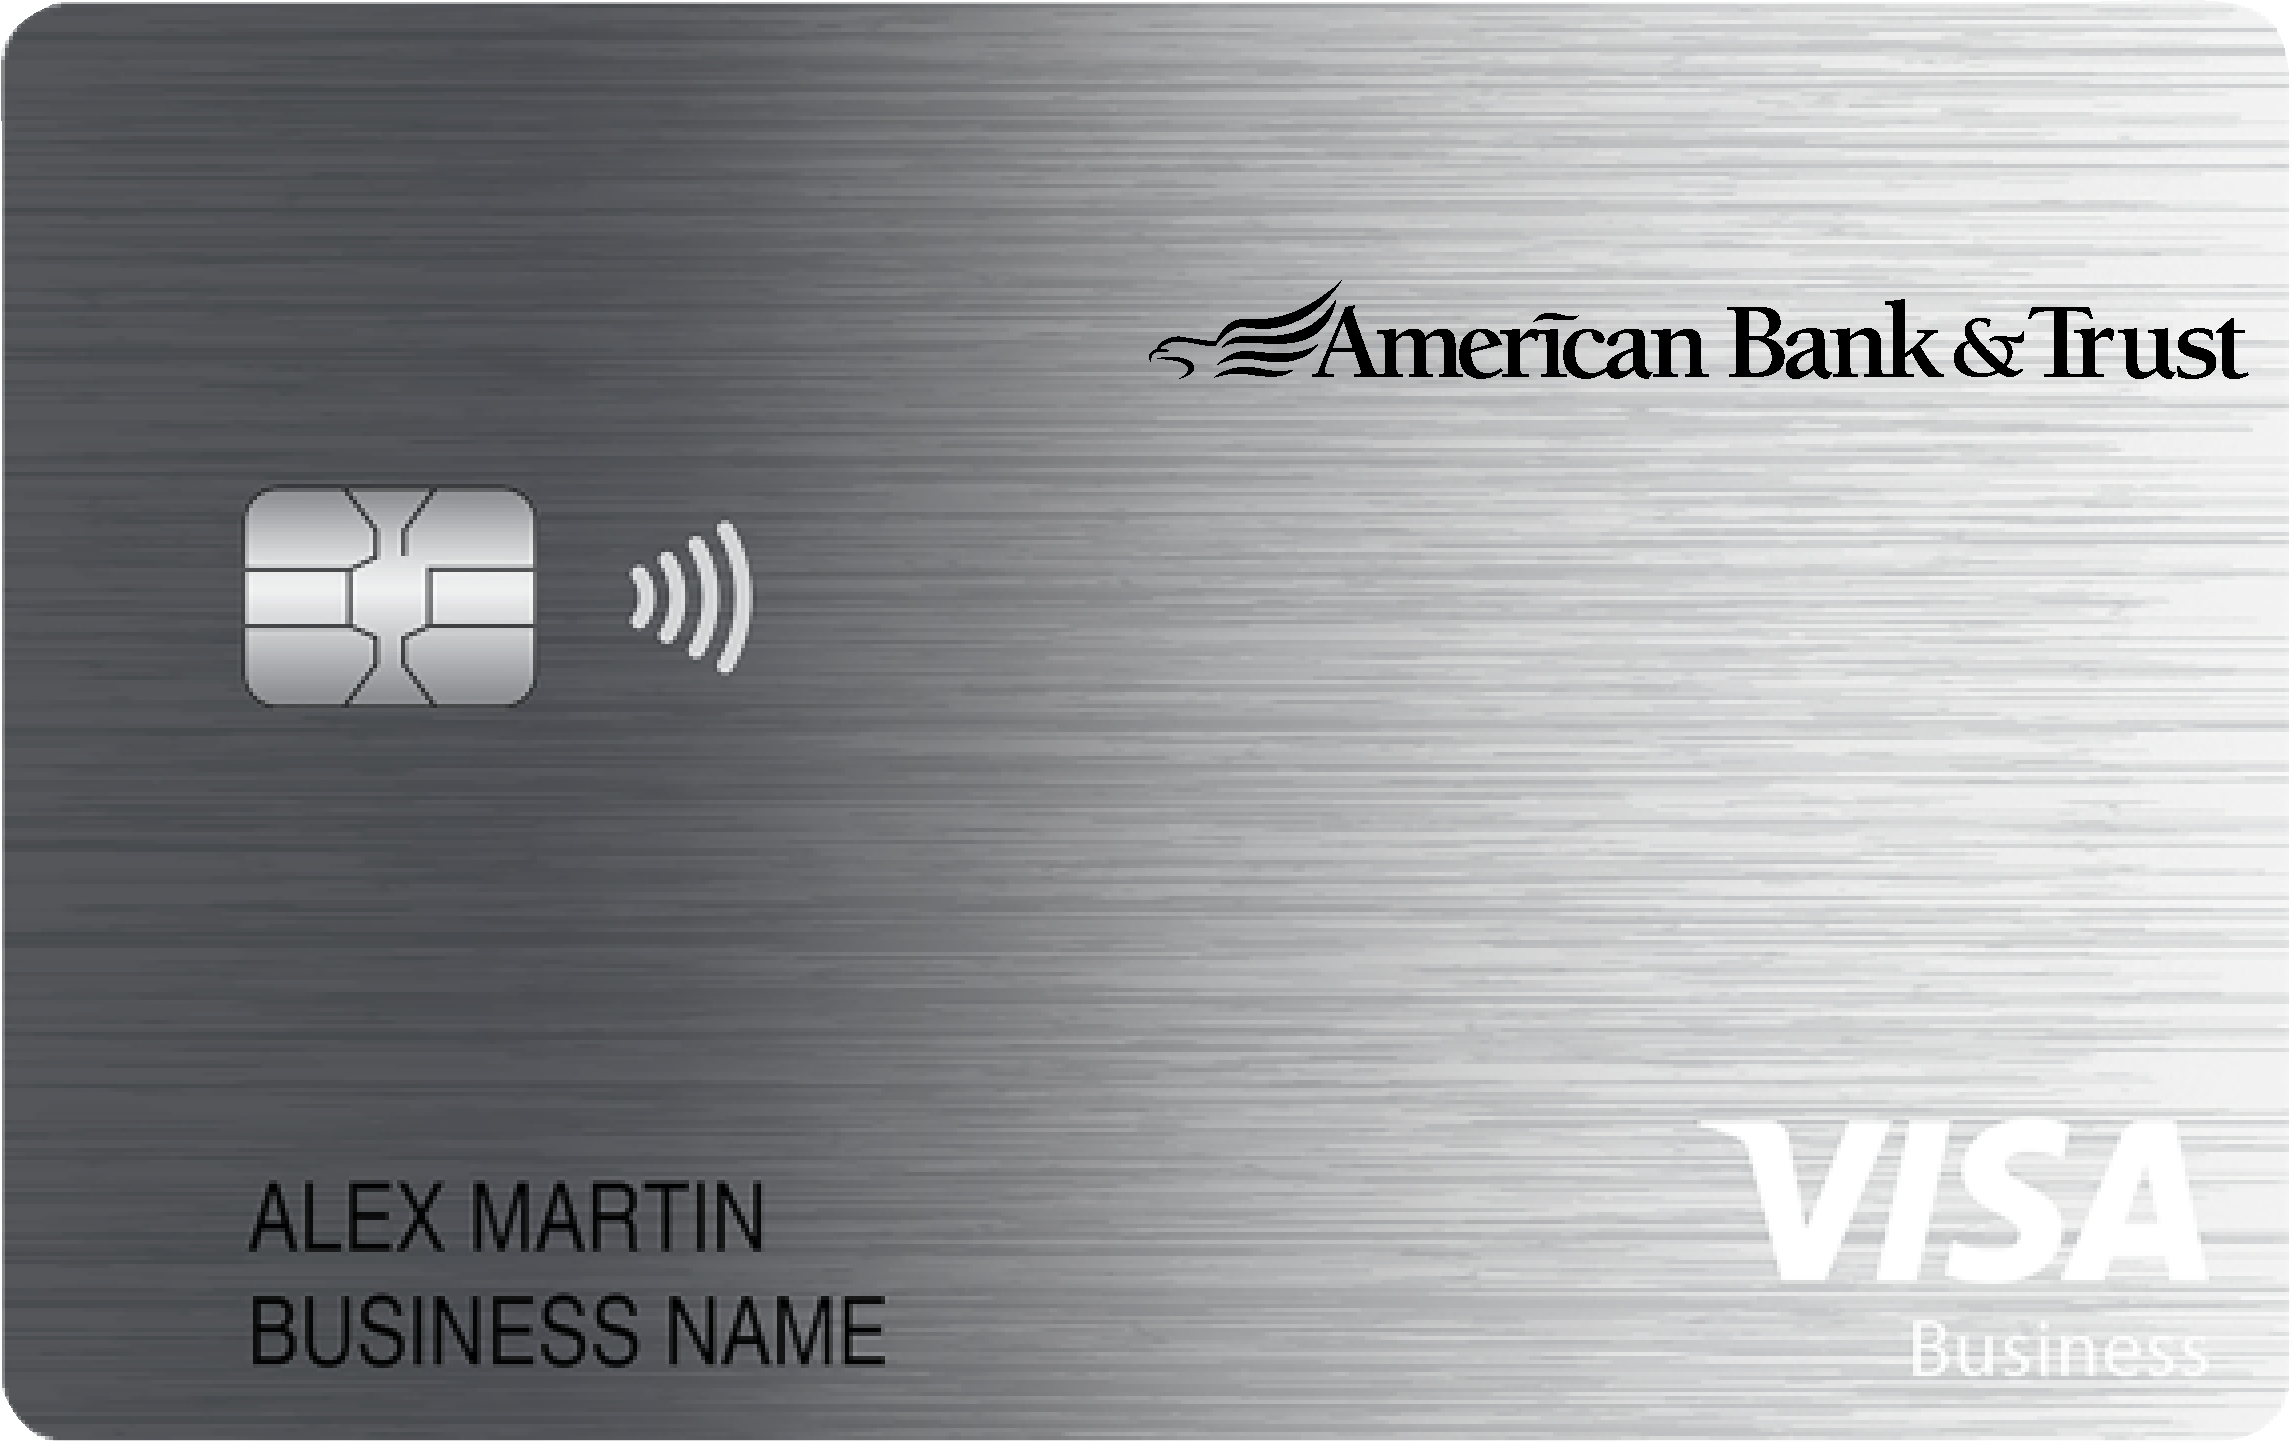 American Bank & Trust Business Cash Preferred Card